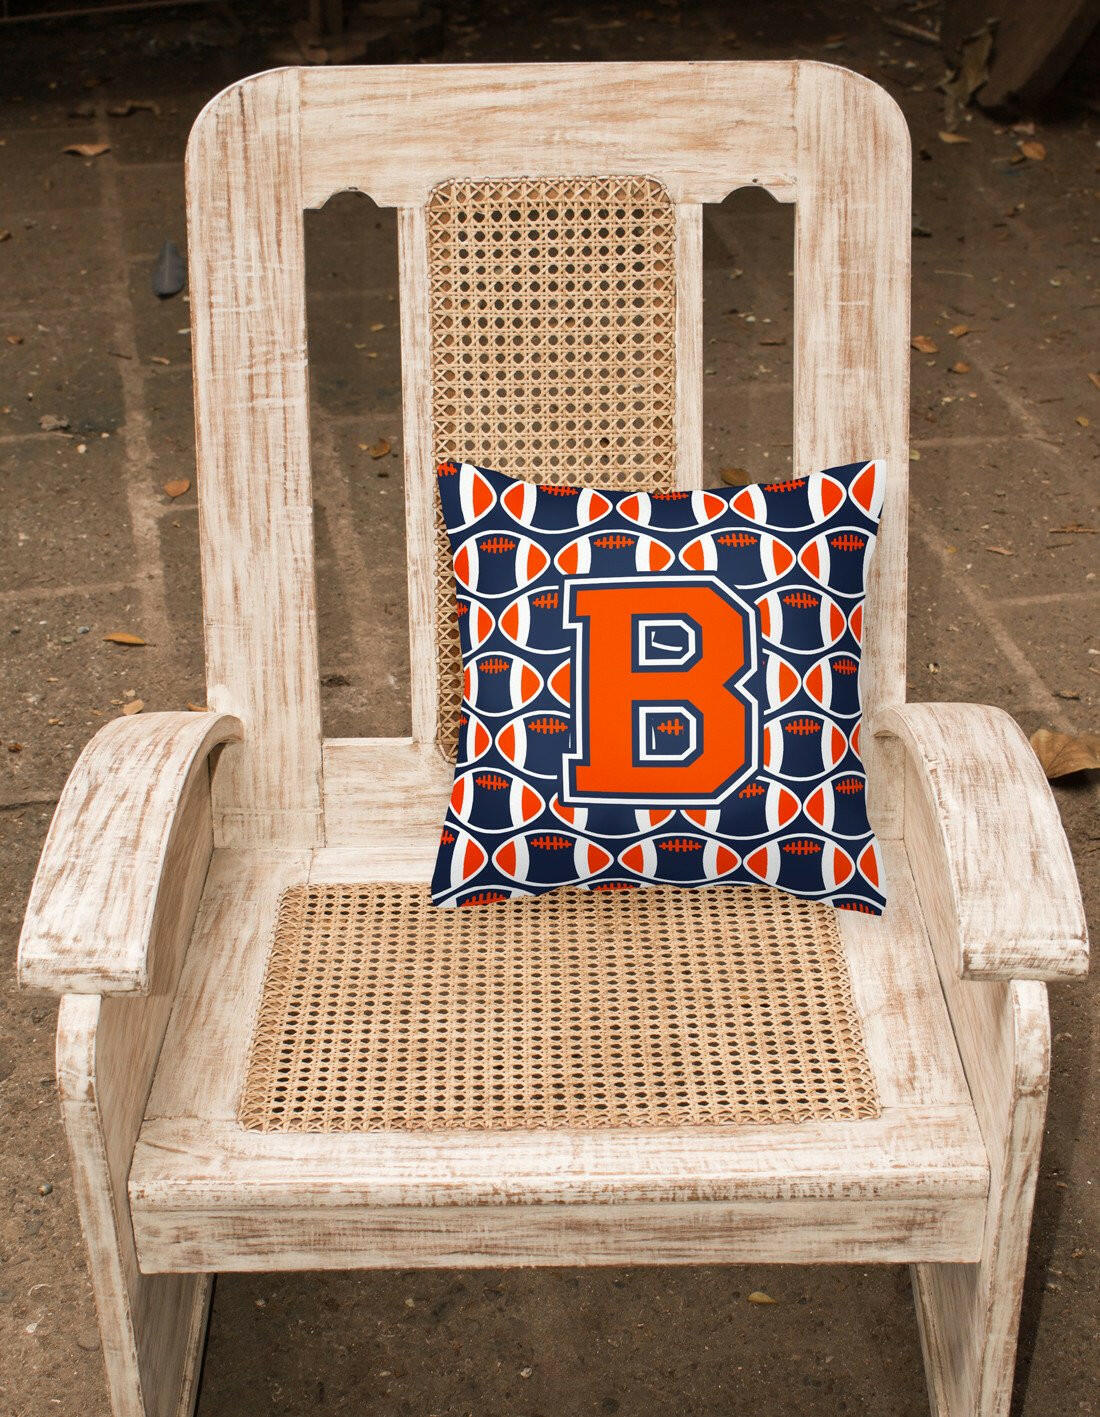 Letter B Football Orange, Blue and white Fabric Decorative Pillow CJ1066-BPW1414 by Caroline's Treasures